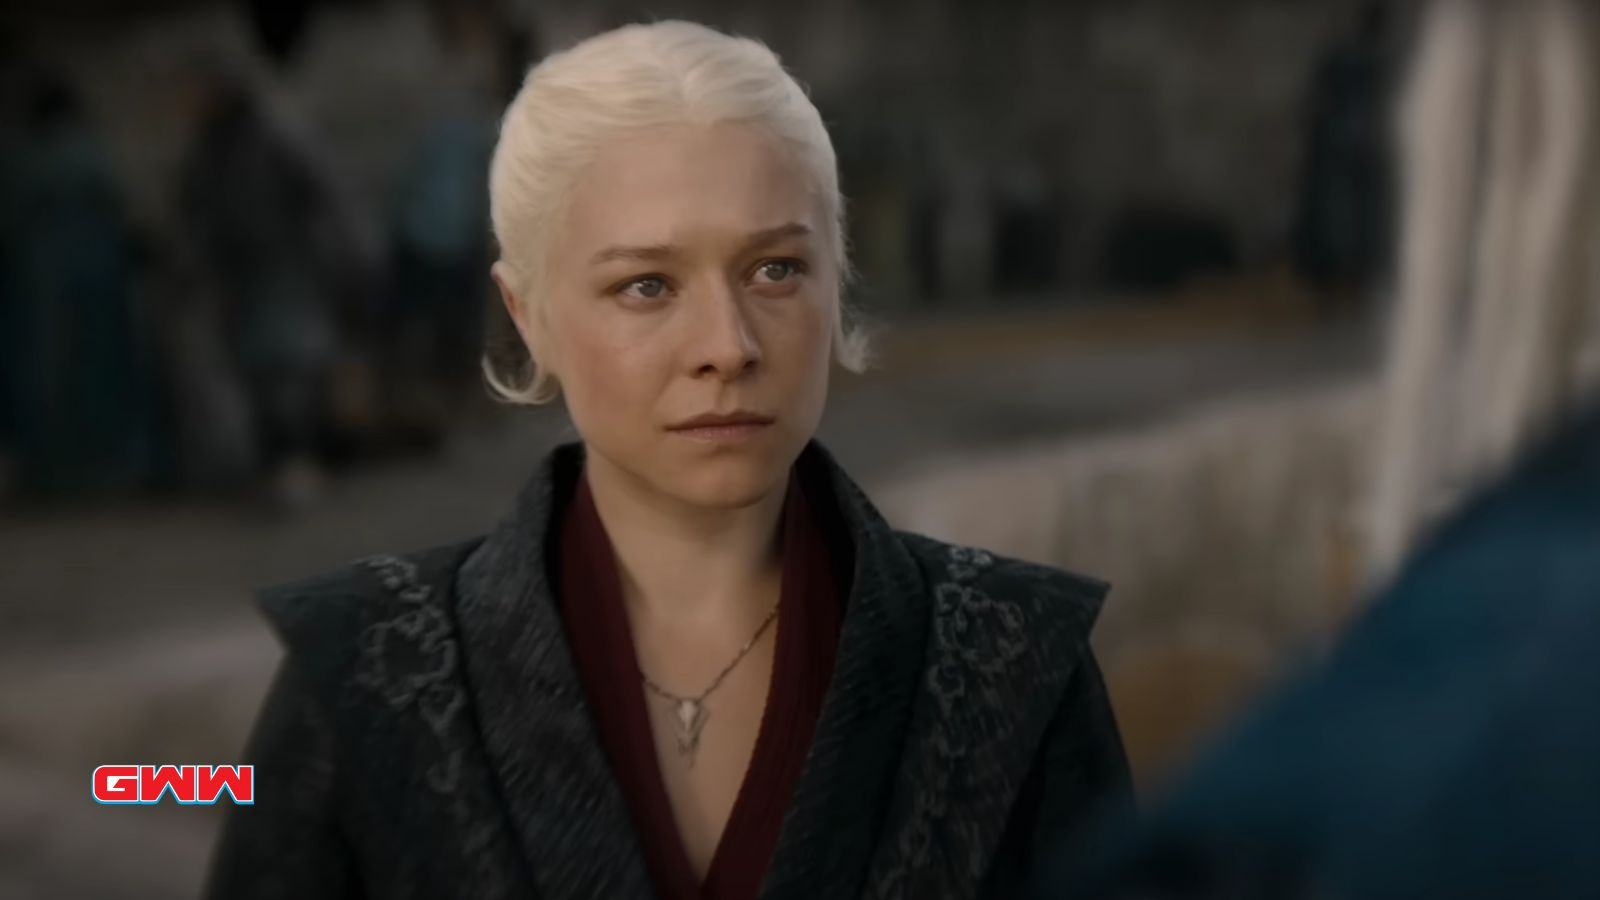 Emma D'Arcy as Rhaenyra Targaryen, House of the Dragon Season 2 Cast